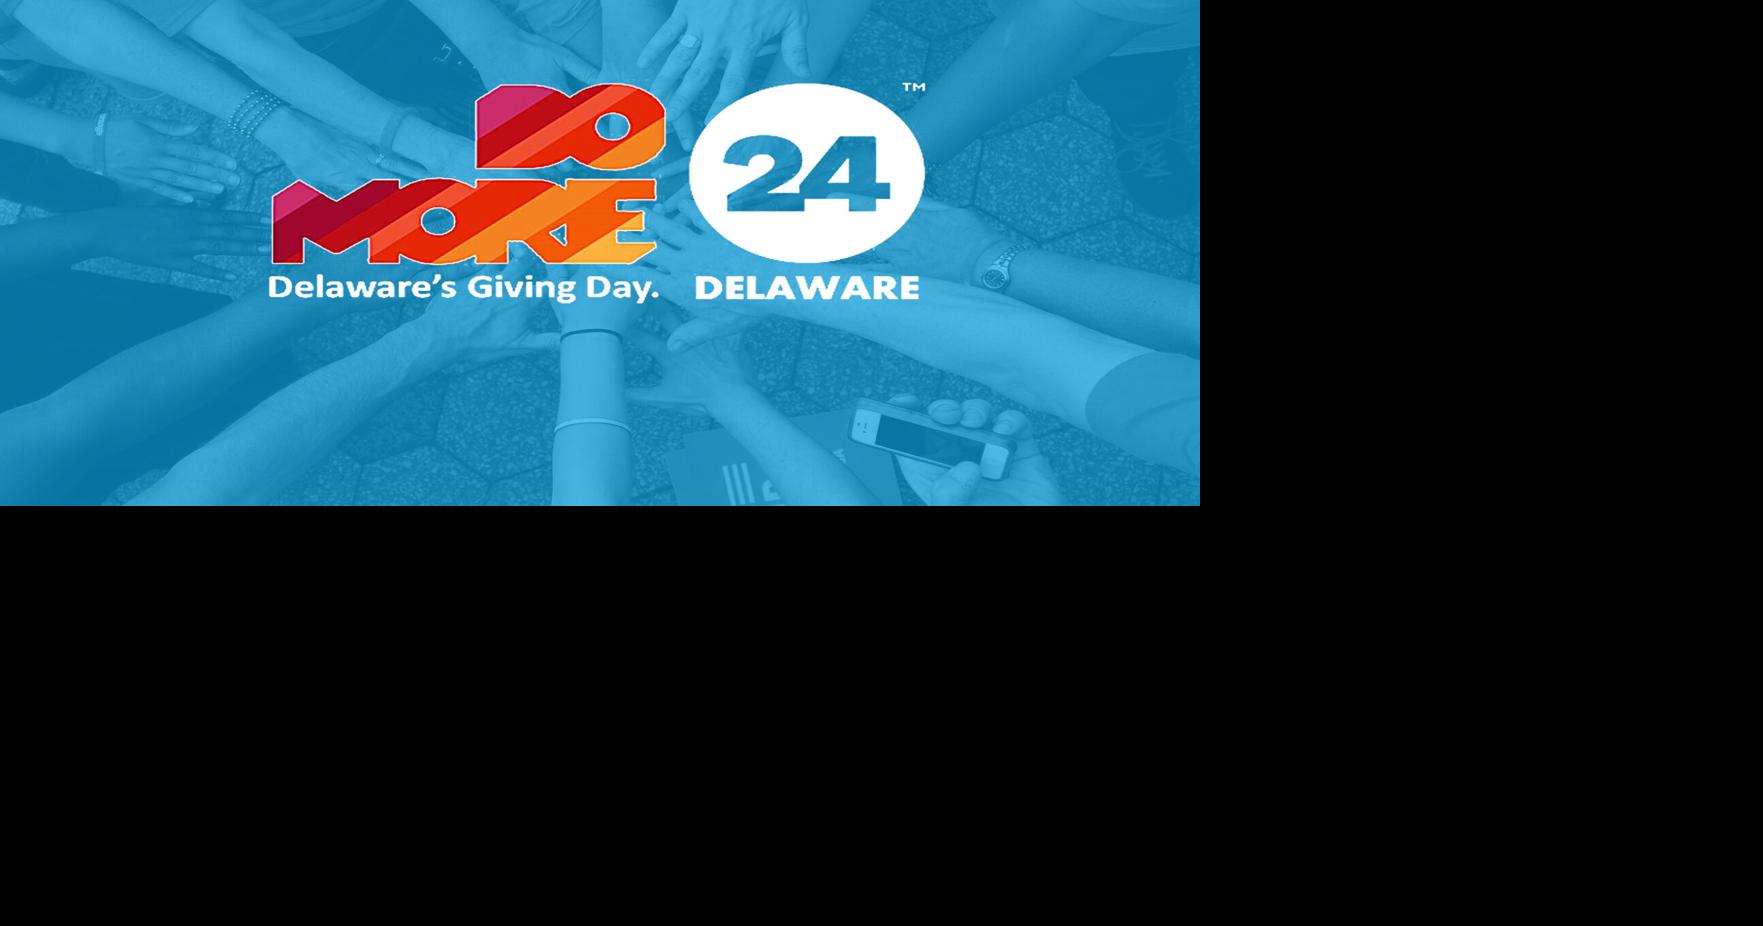 Over $2 Million Raised for Delaware Nonprofits During Do More 24